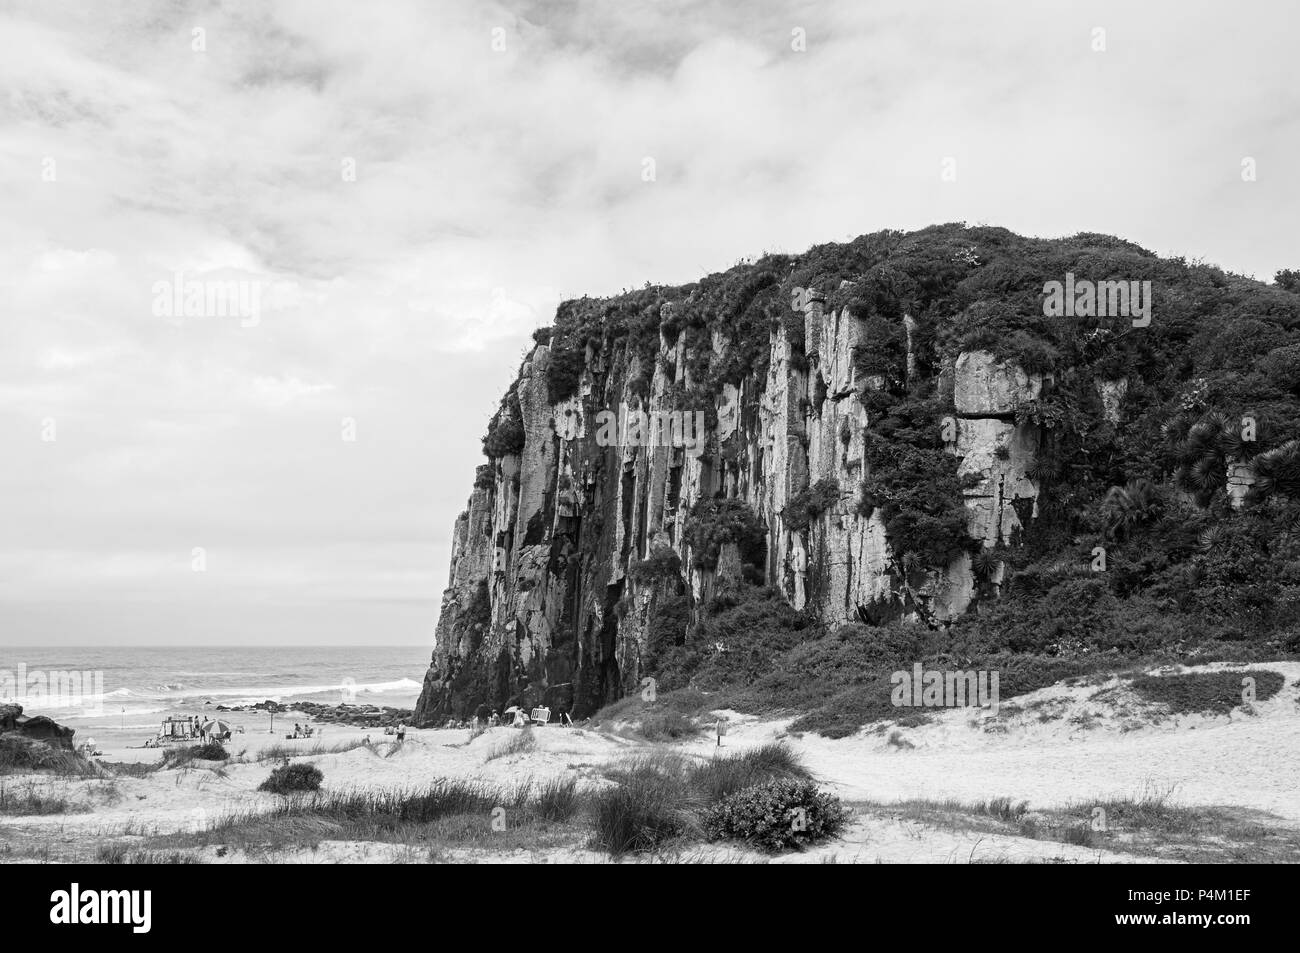 Guarita Stadt Strand Torres Brasilien Sand Rock cliff Meer Natur Schwarz Weiß Stockfoto